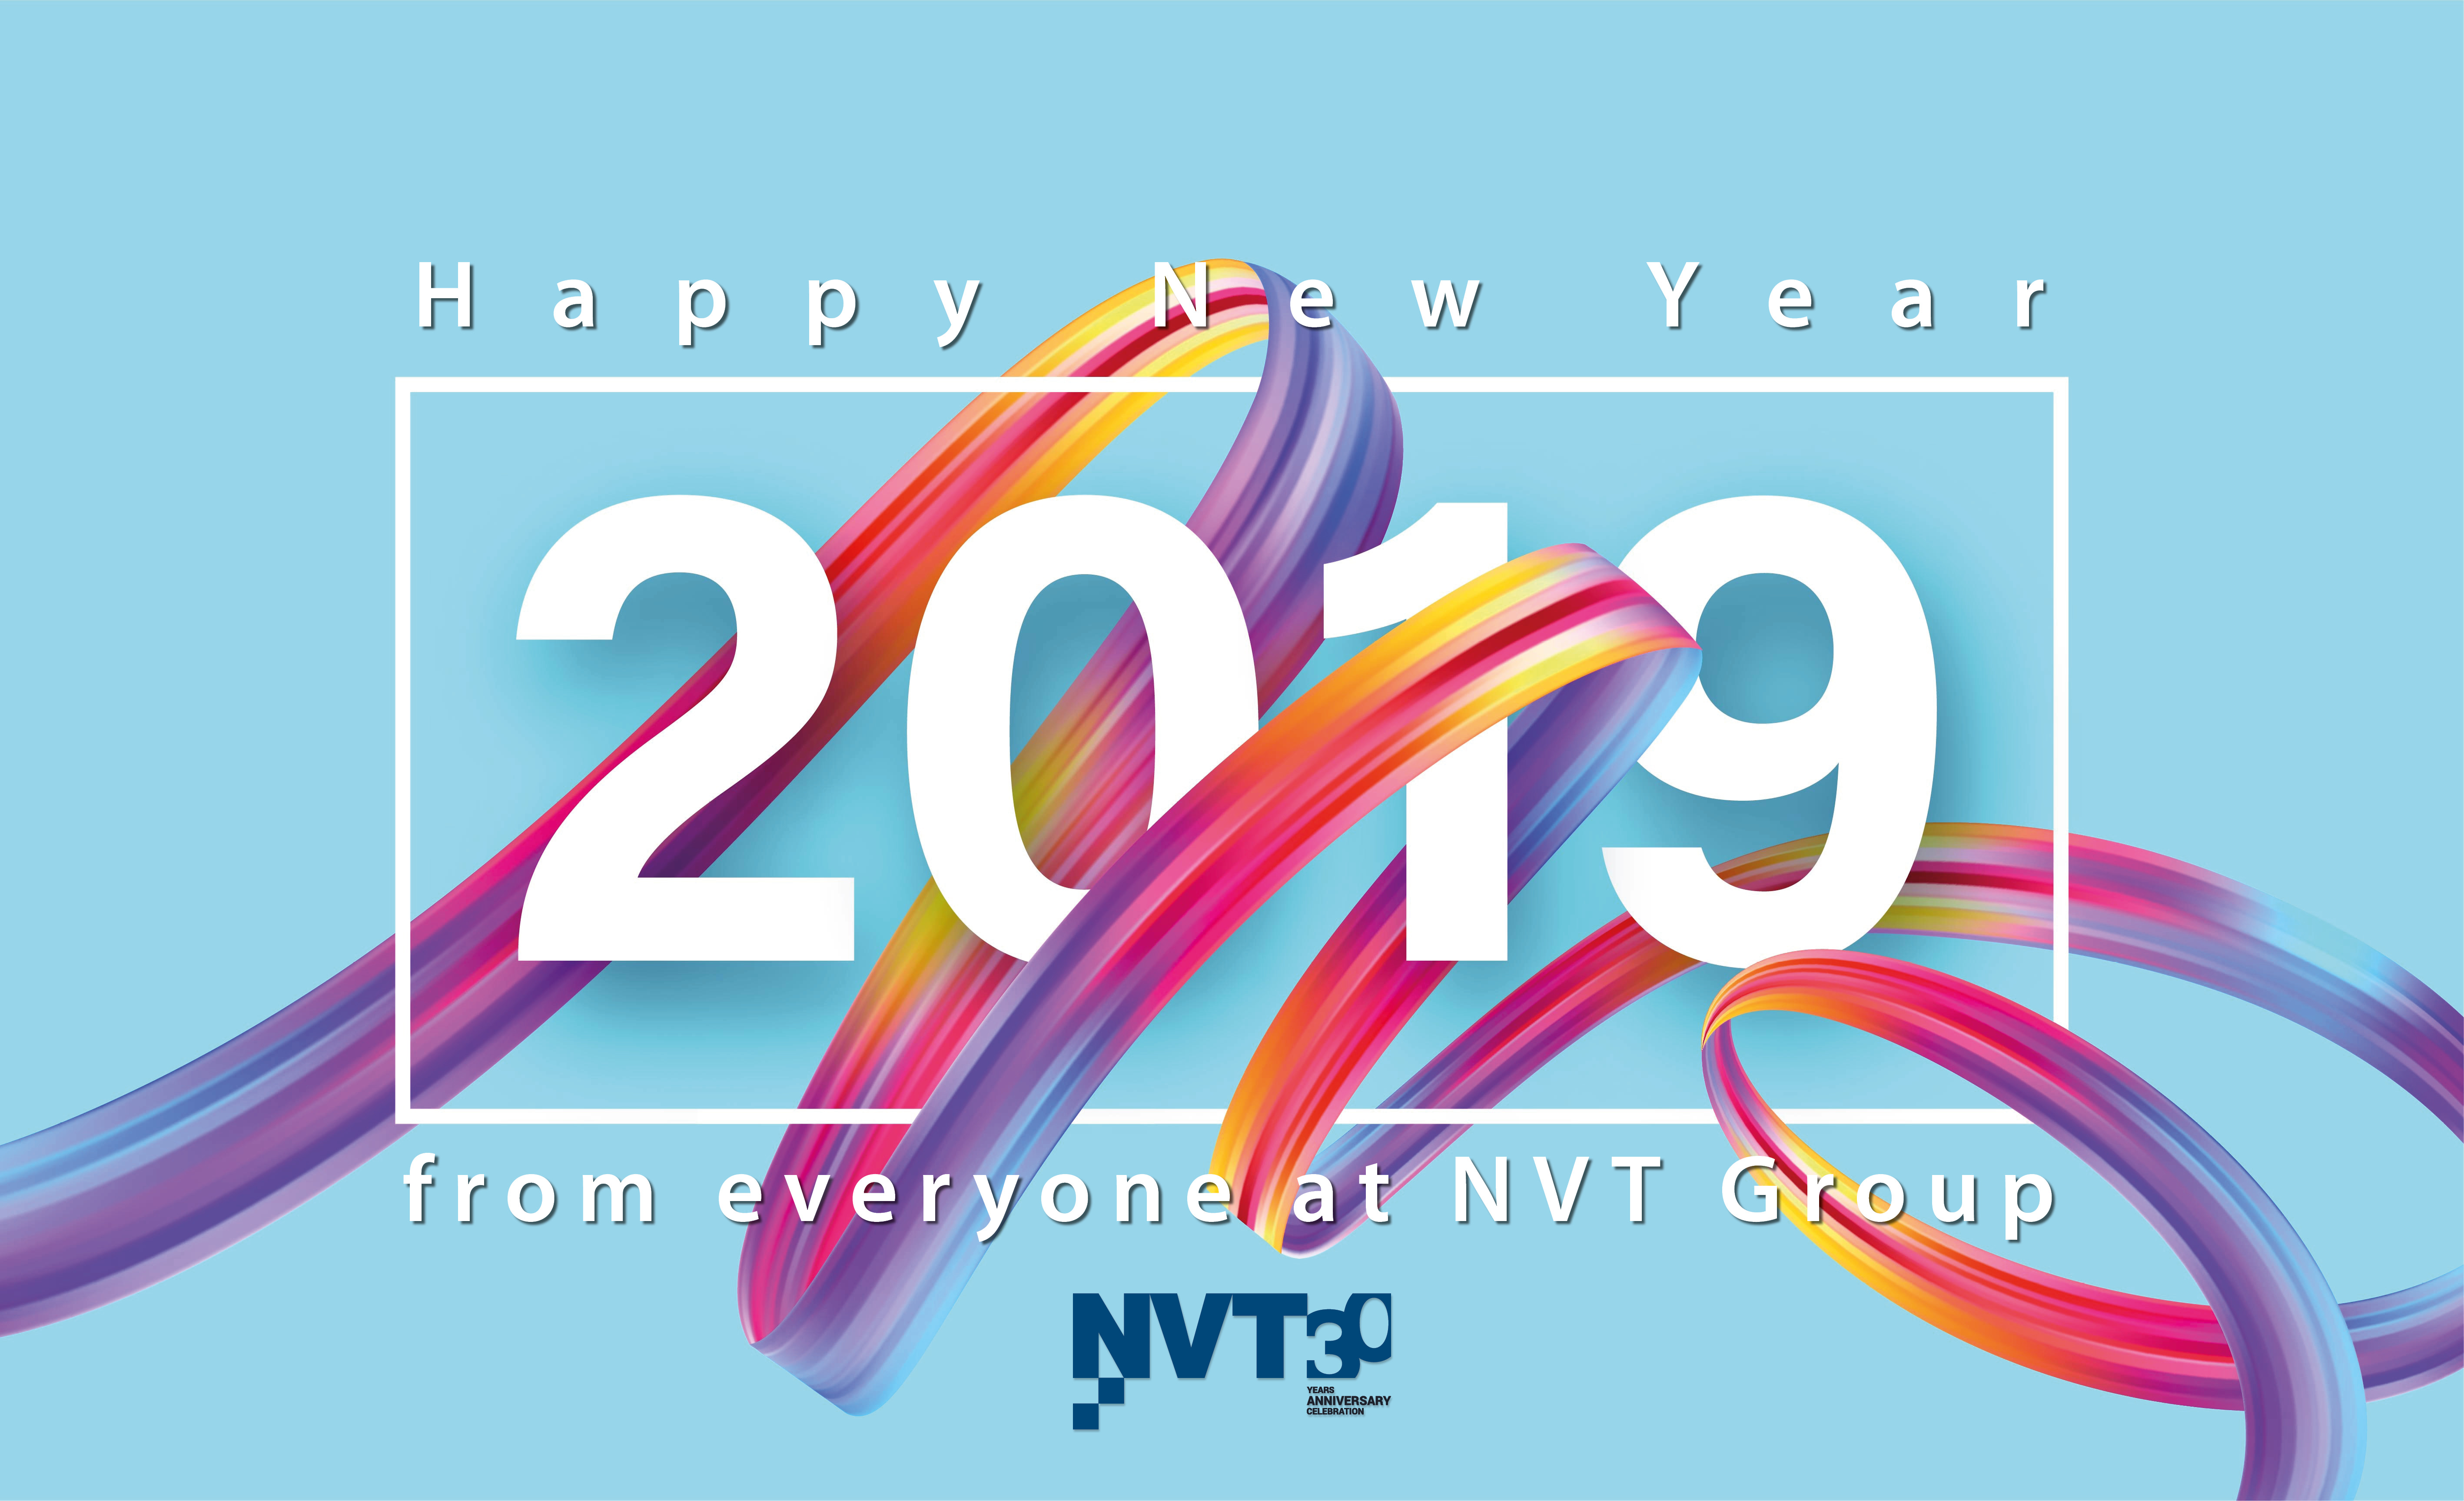 Happy New Year Greeting 2019